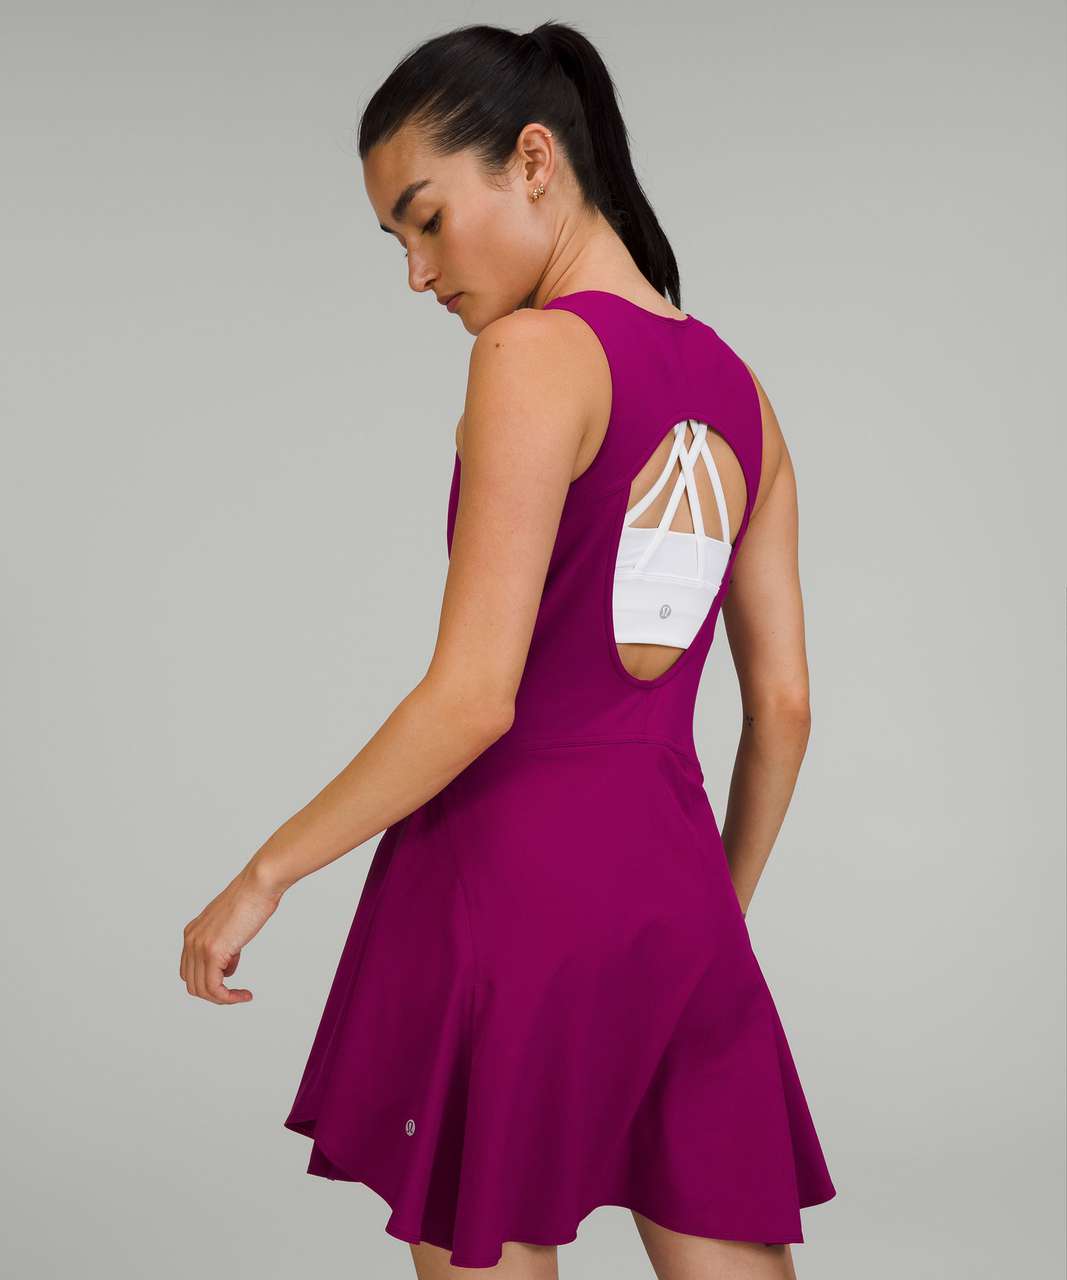 Lululemon Everlux Short-Lined Tennis Tank Top Dress 8" - Magenta Purple